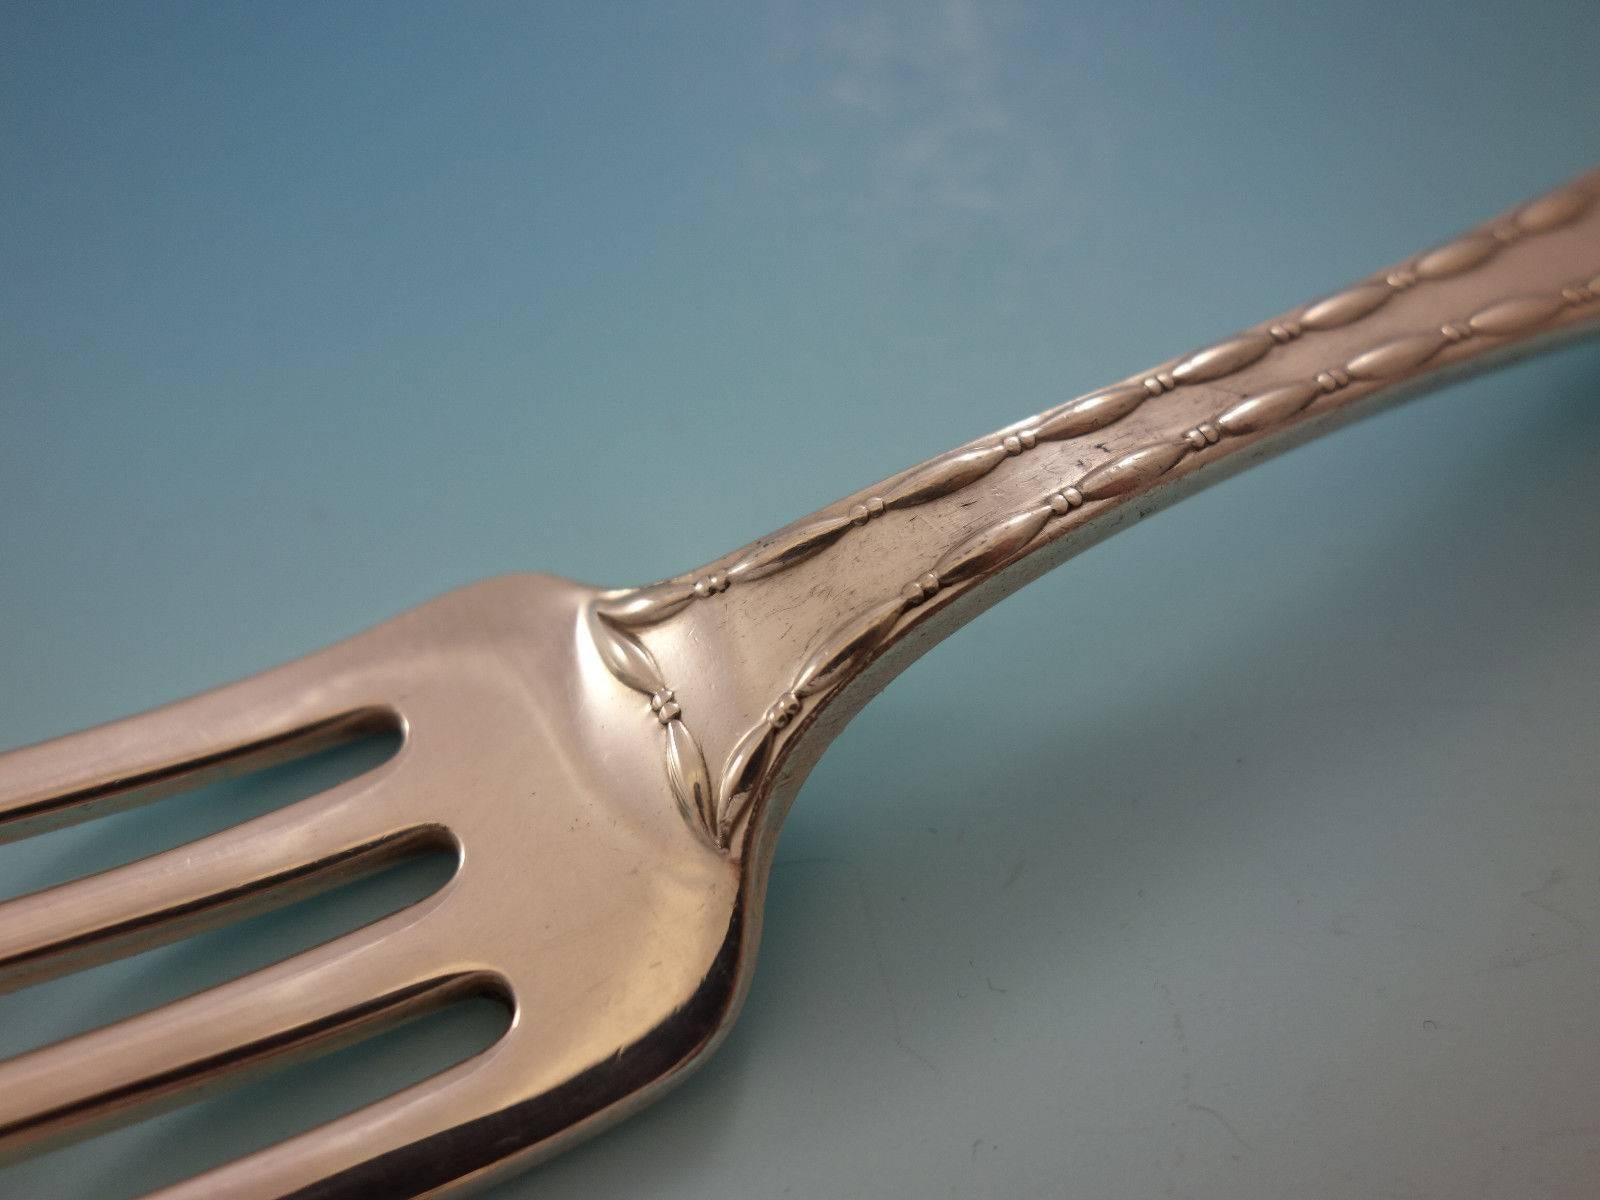 formal cutlery set